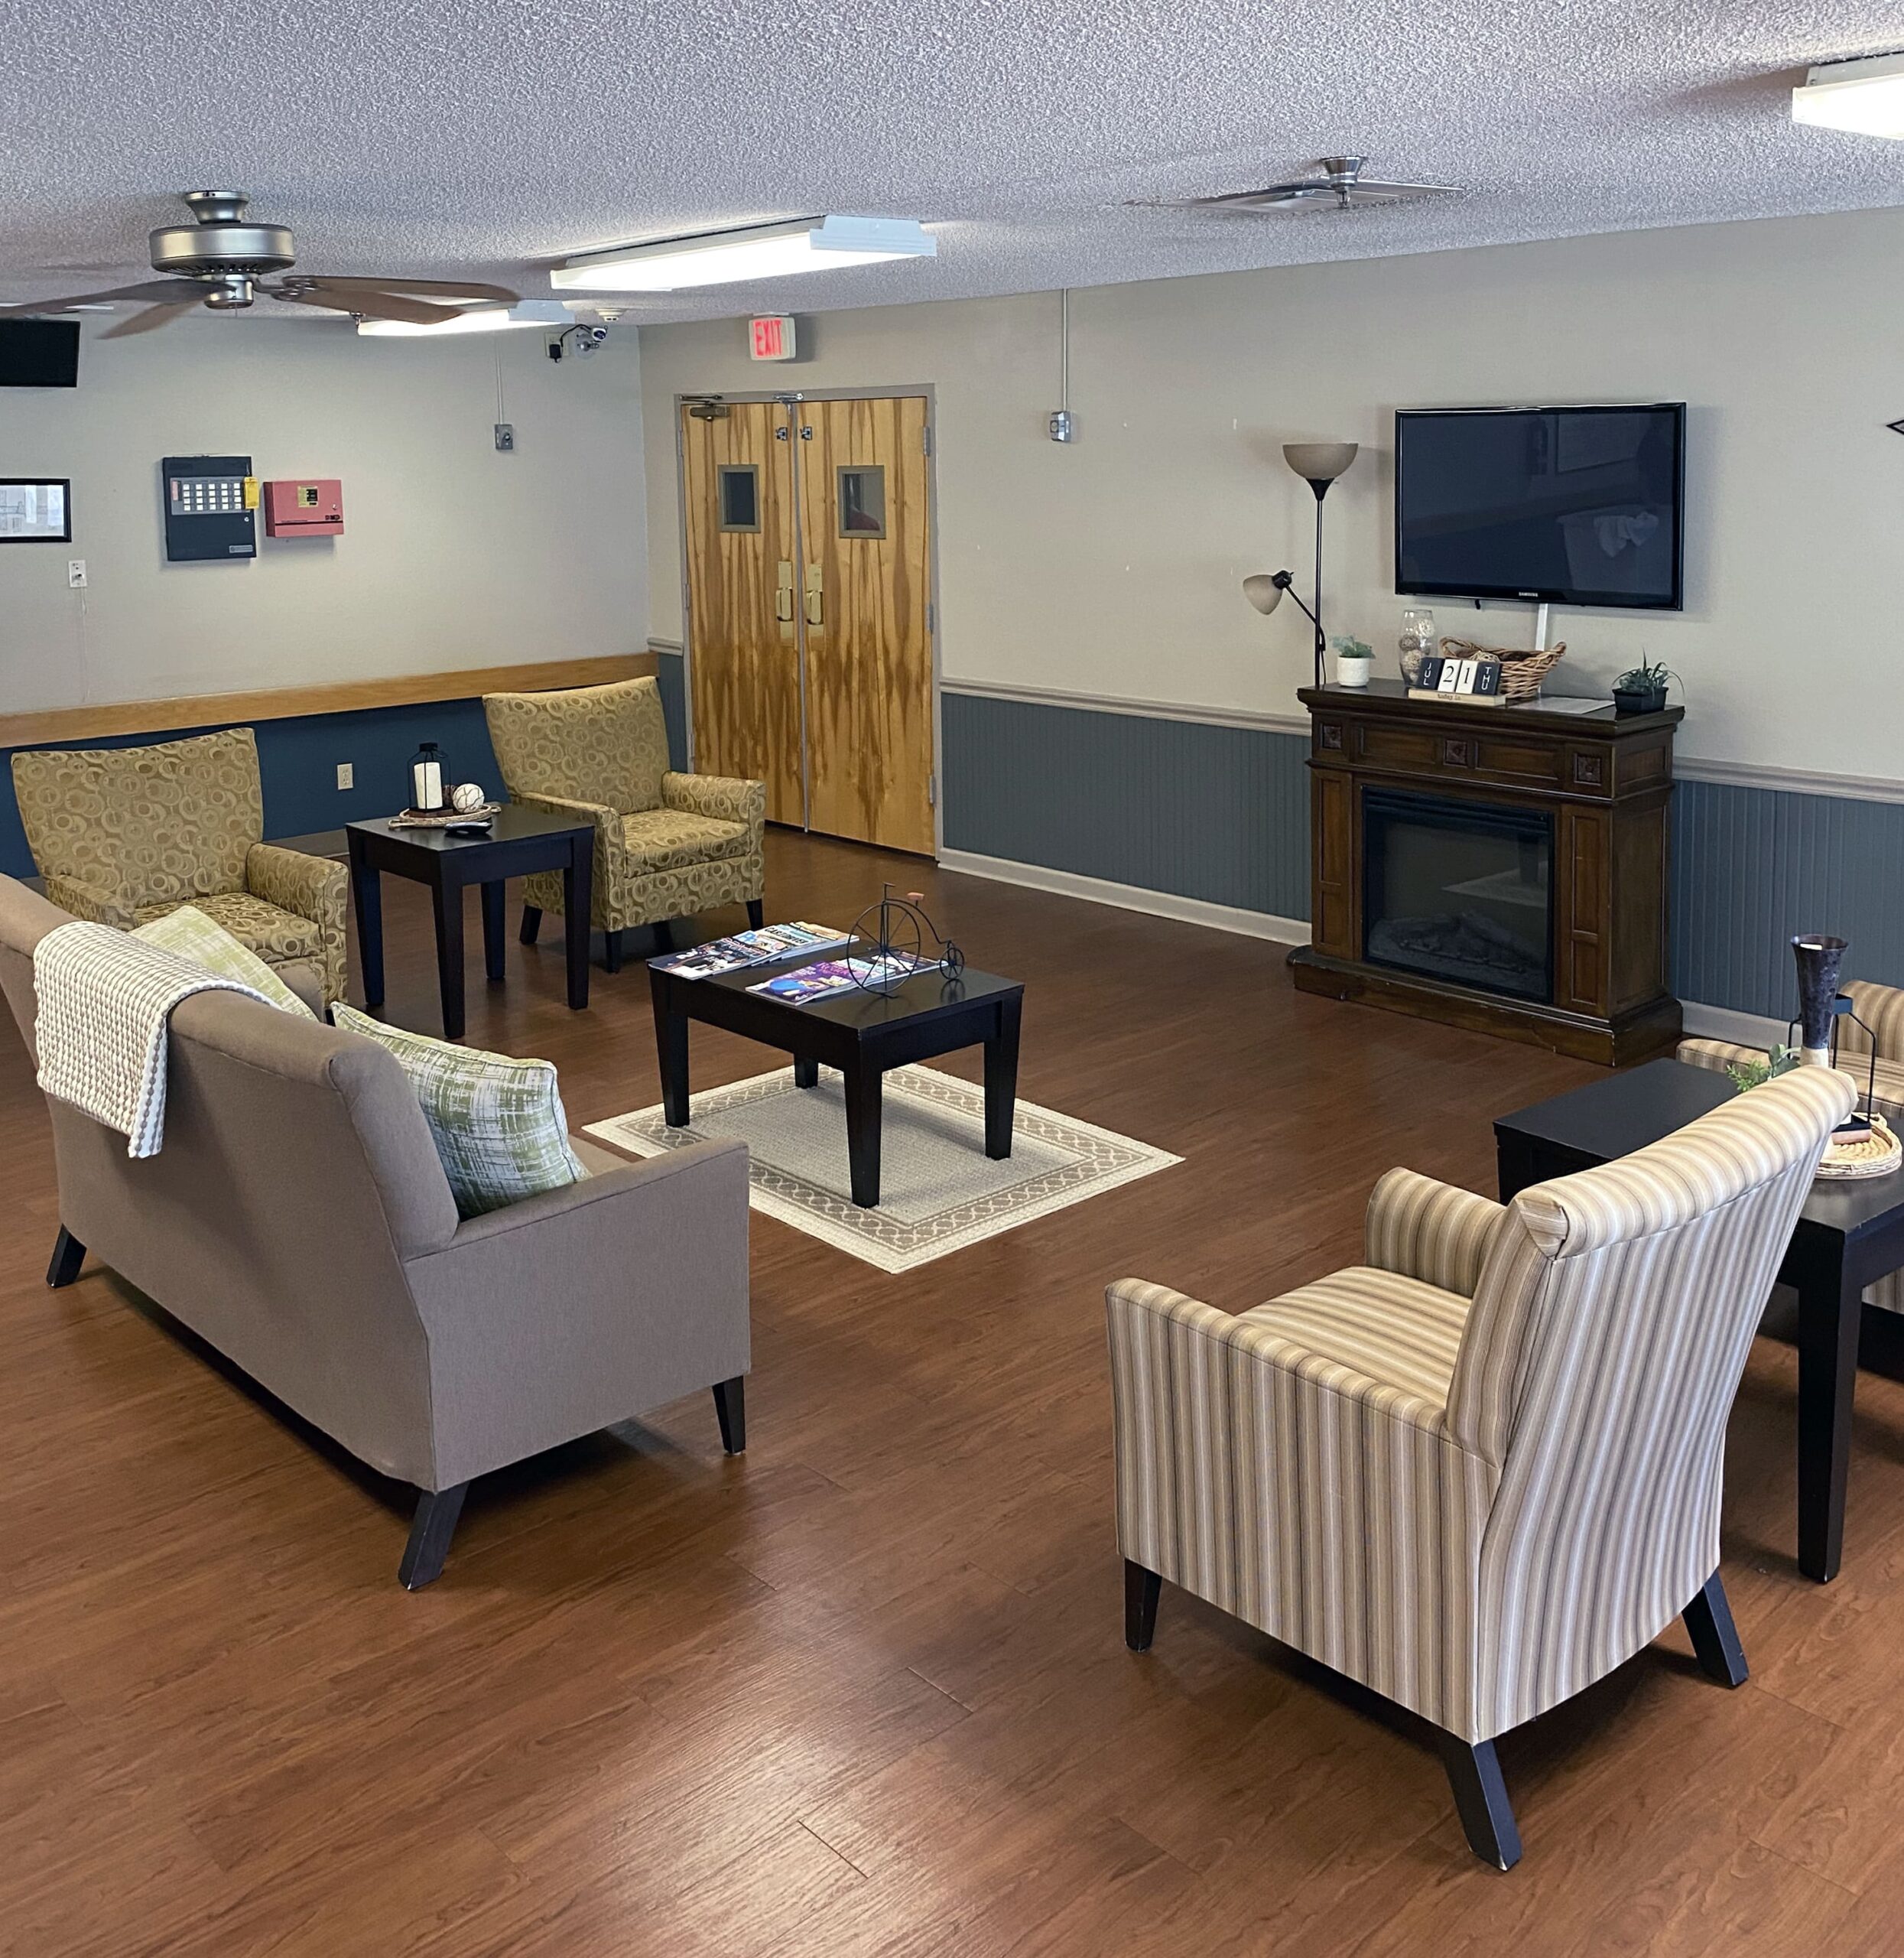 Brickyard Healthcare Petersburg Care Center interior sitting area